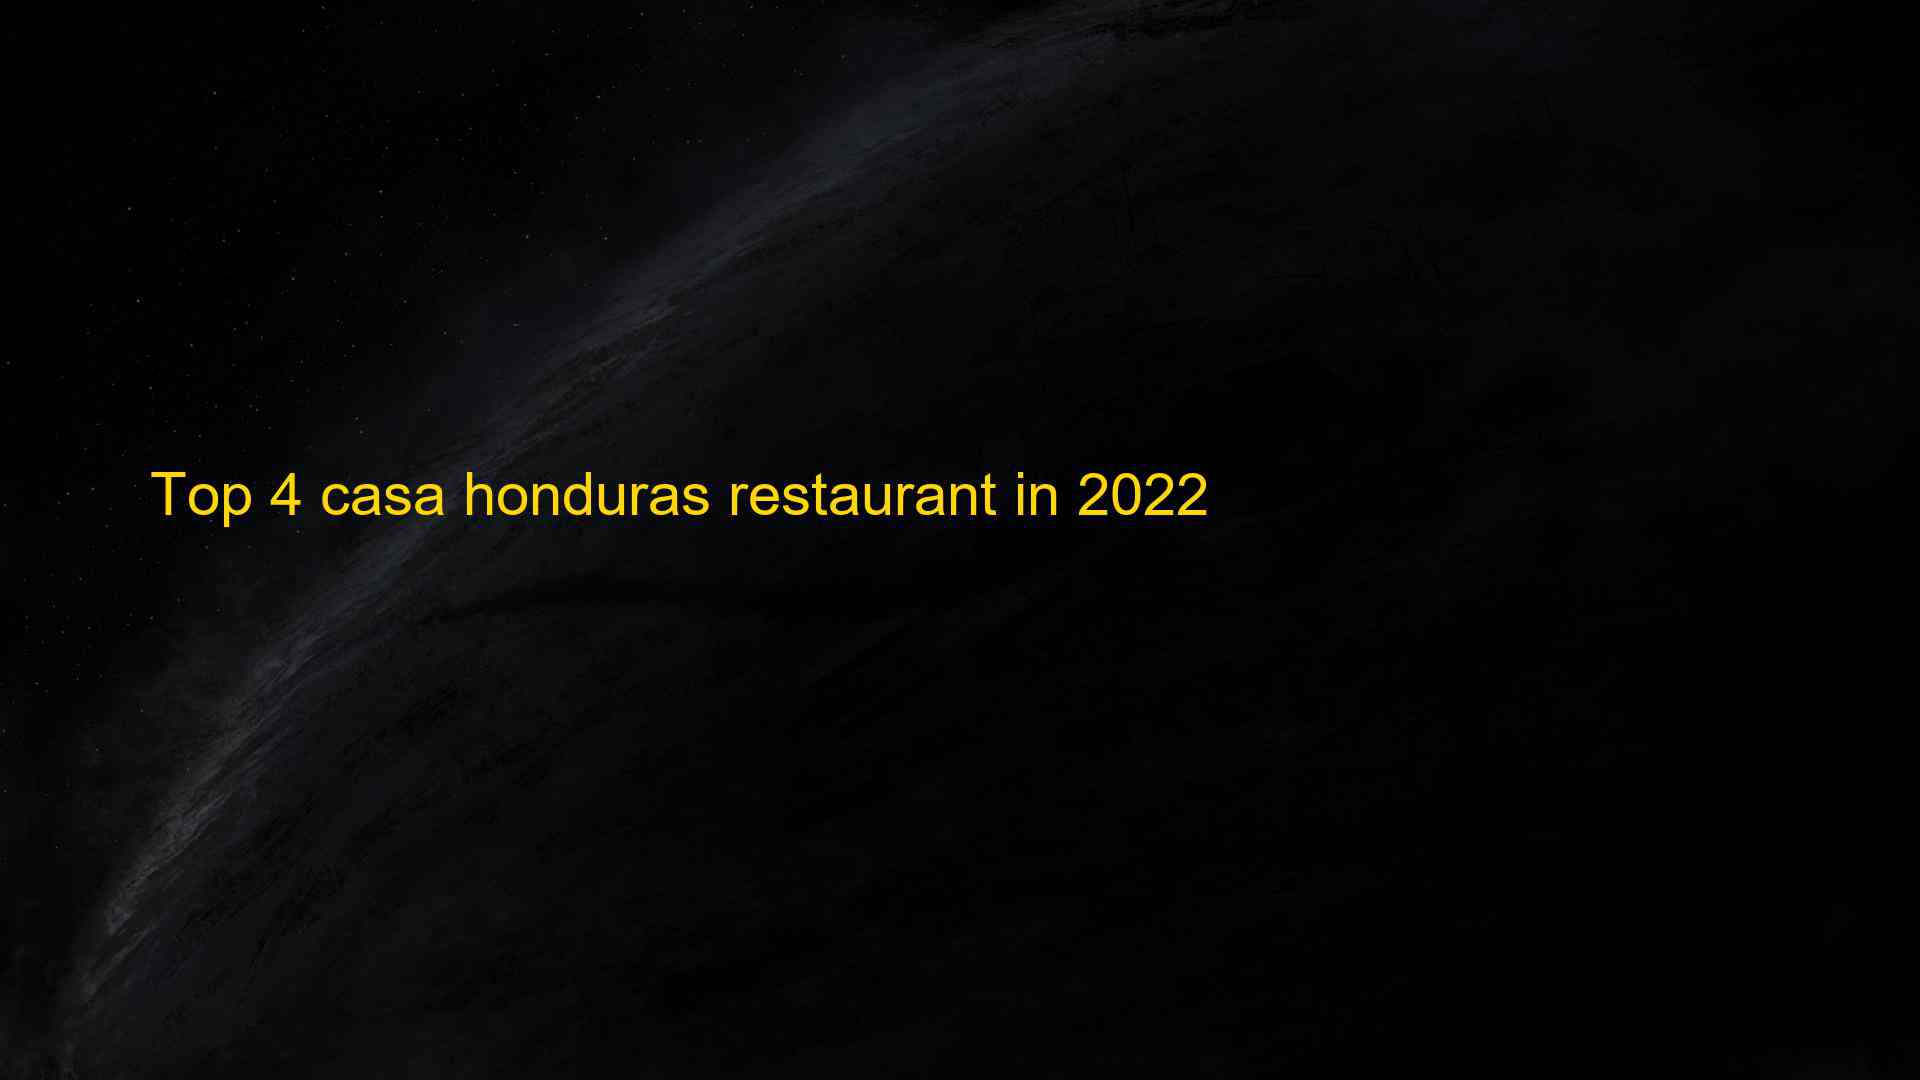 Top 4 casa honduras restaurant in 2022 1662830426